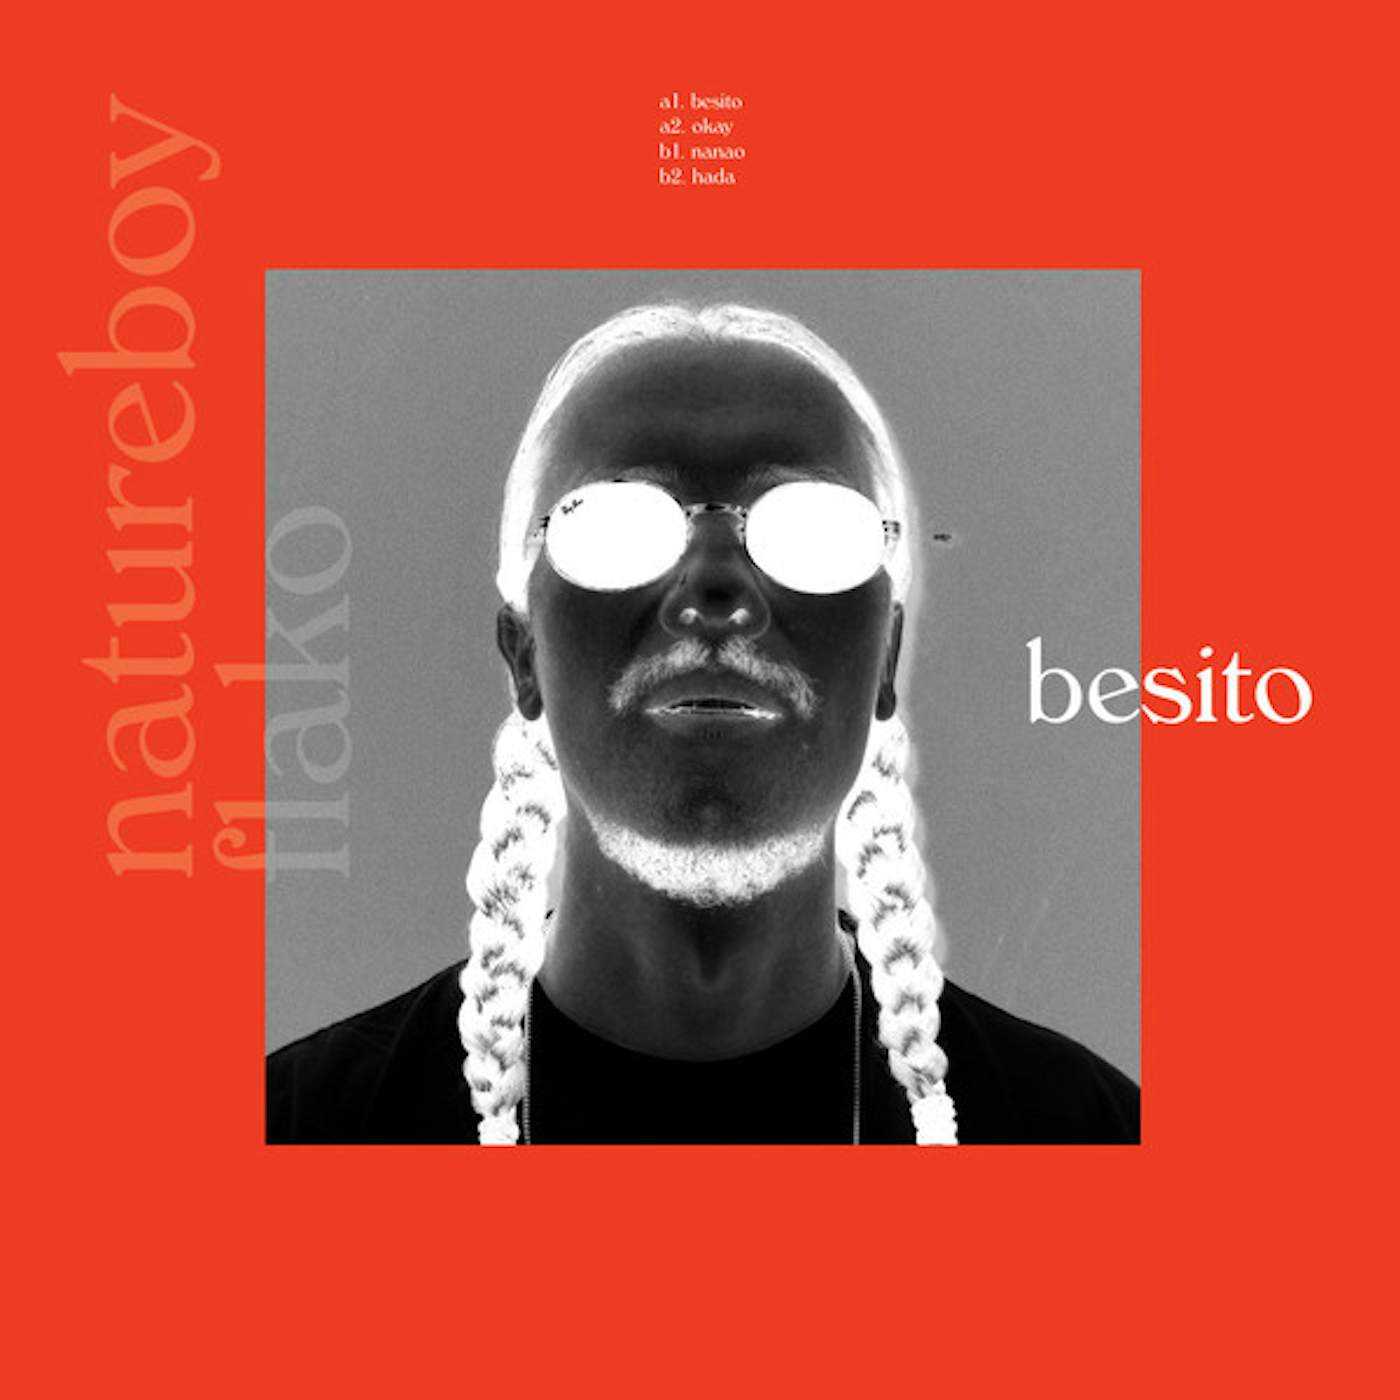 Natureboy Flako Besito Vinyl Record